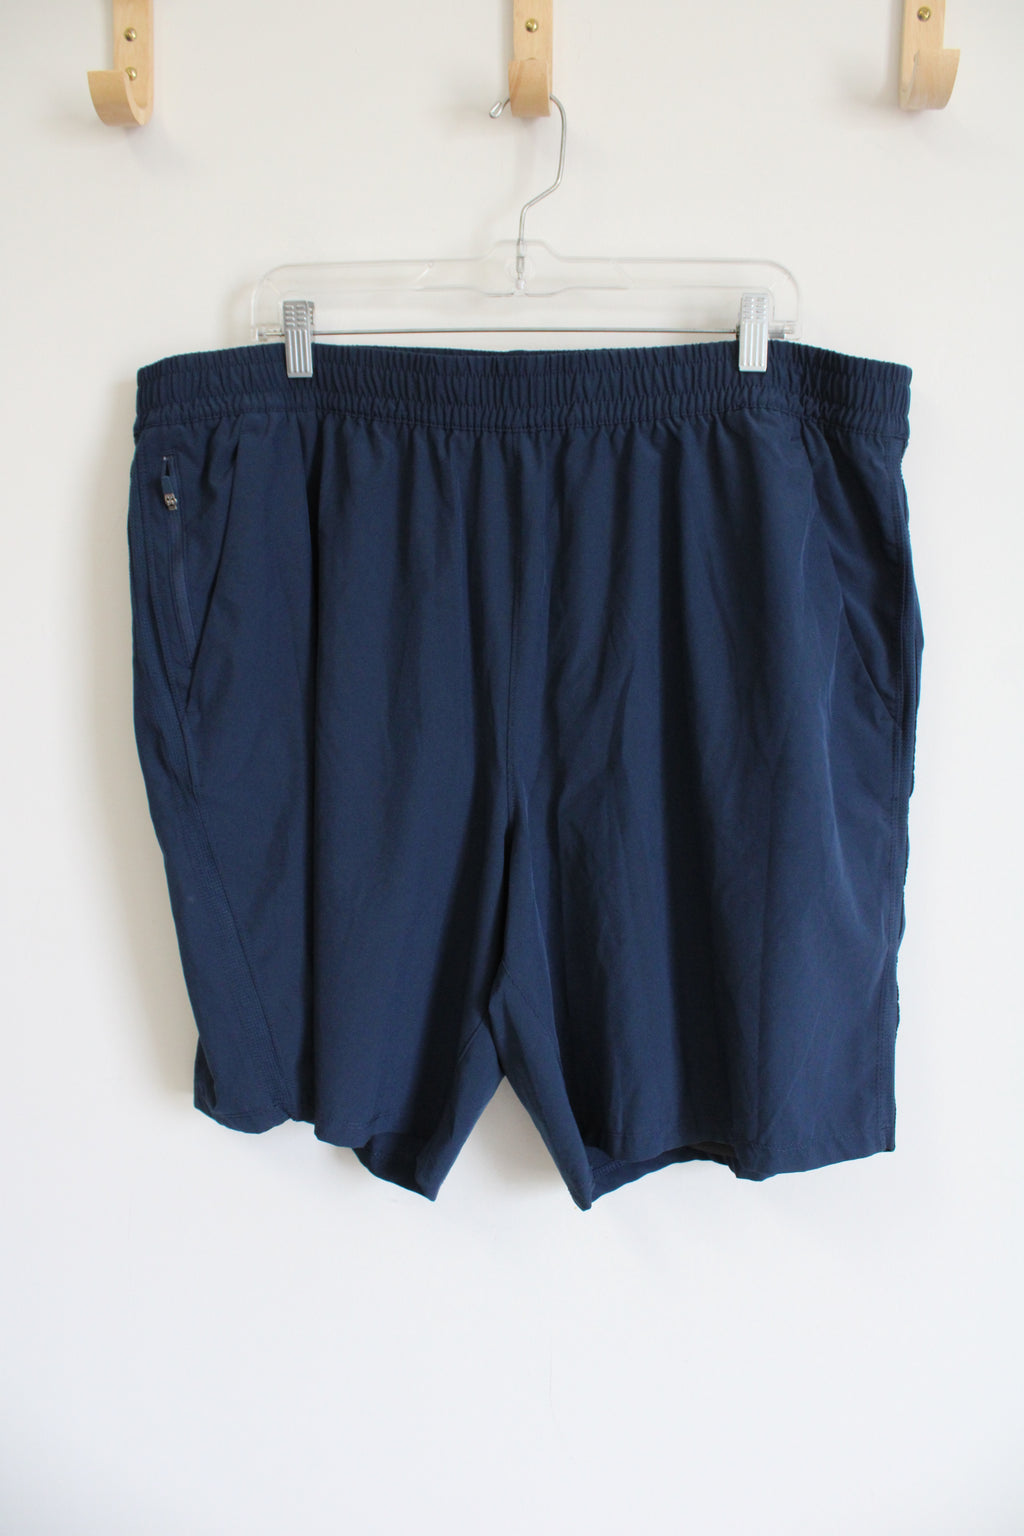 Athletic Works Navy Shorts | 2XL